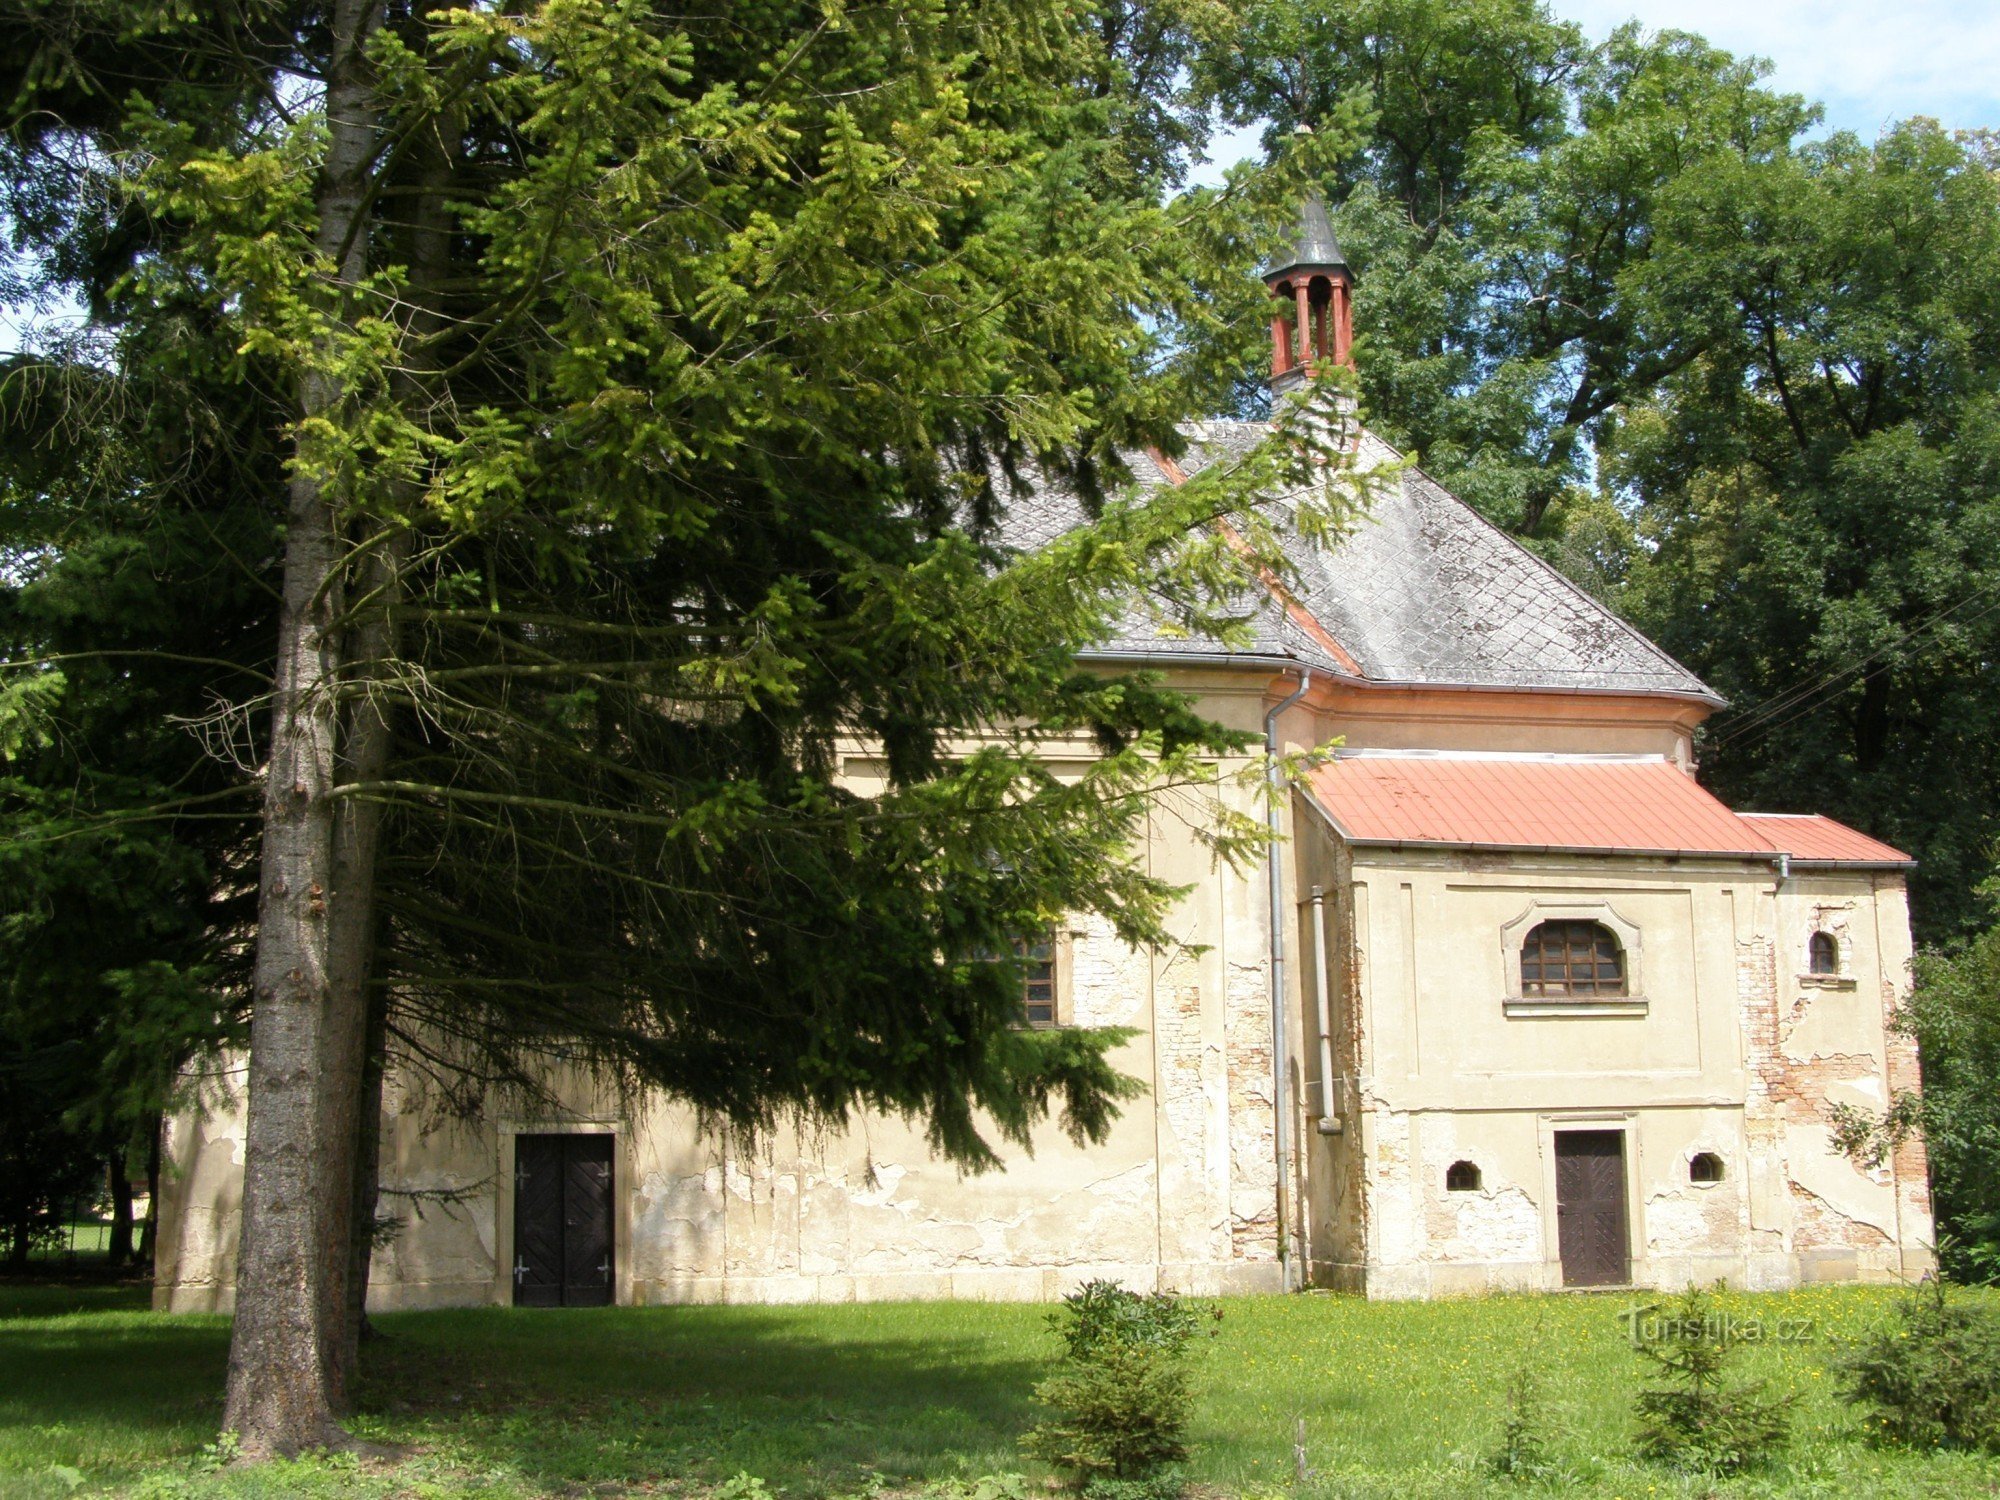 Hlušice - church of St. Wenceslas